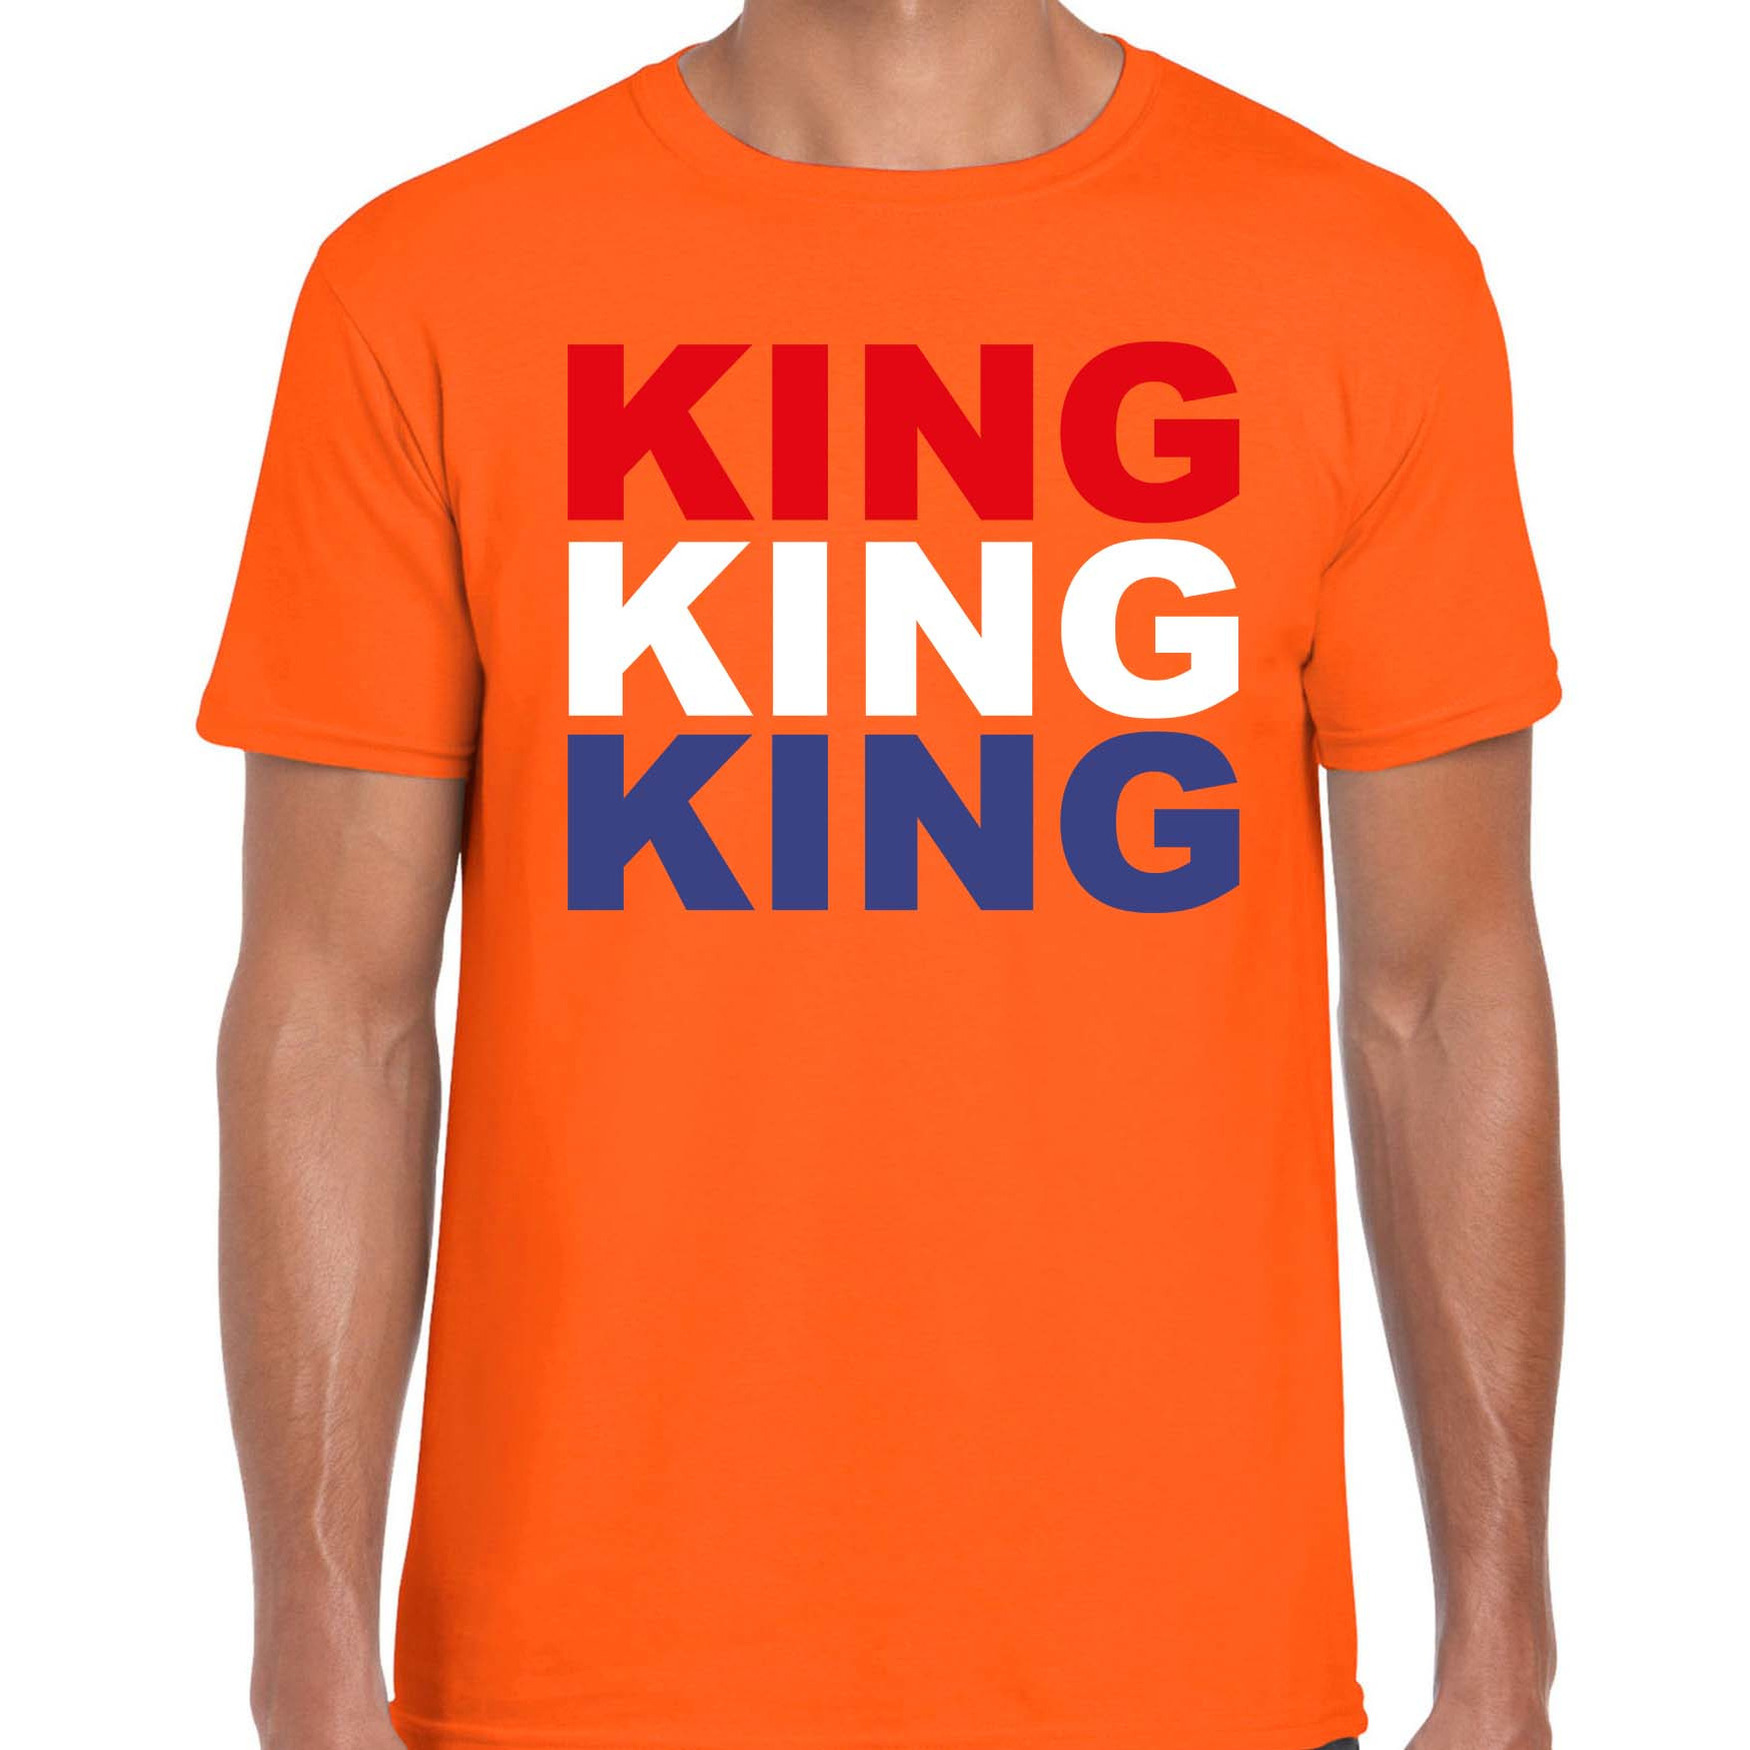 King t-shirt oranje voor heren Koningsdag shirts